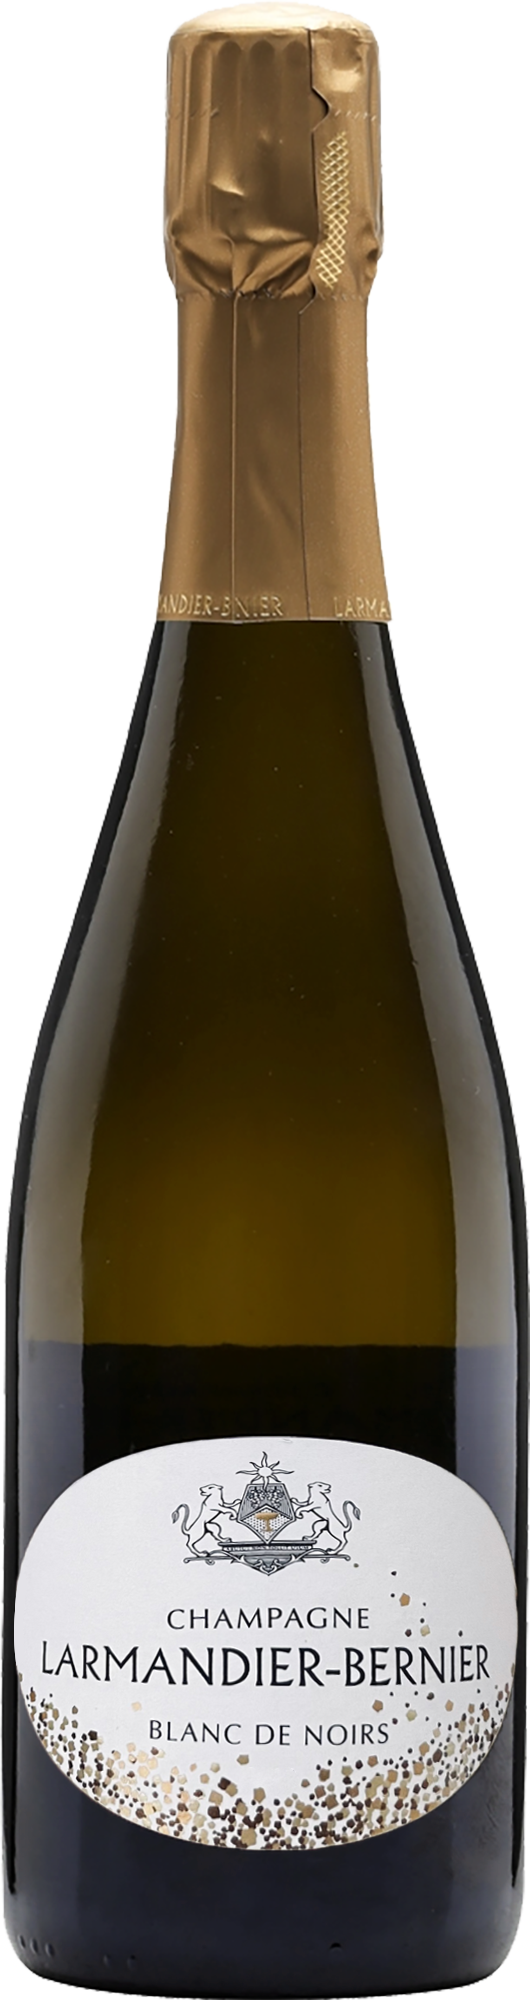 Champagne Larmandier-Bernier 1er Cru Blanc de Noirs 2015 (Disg. May 2022)